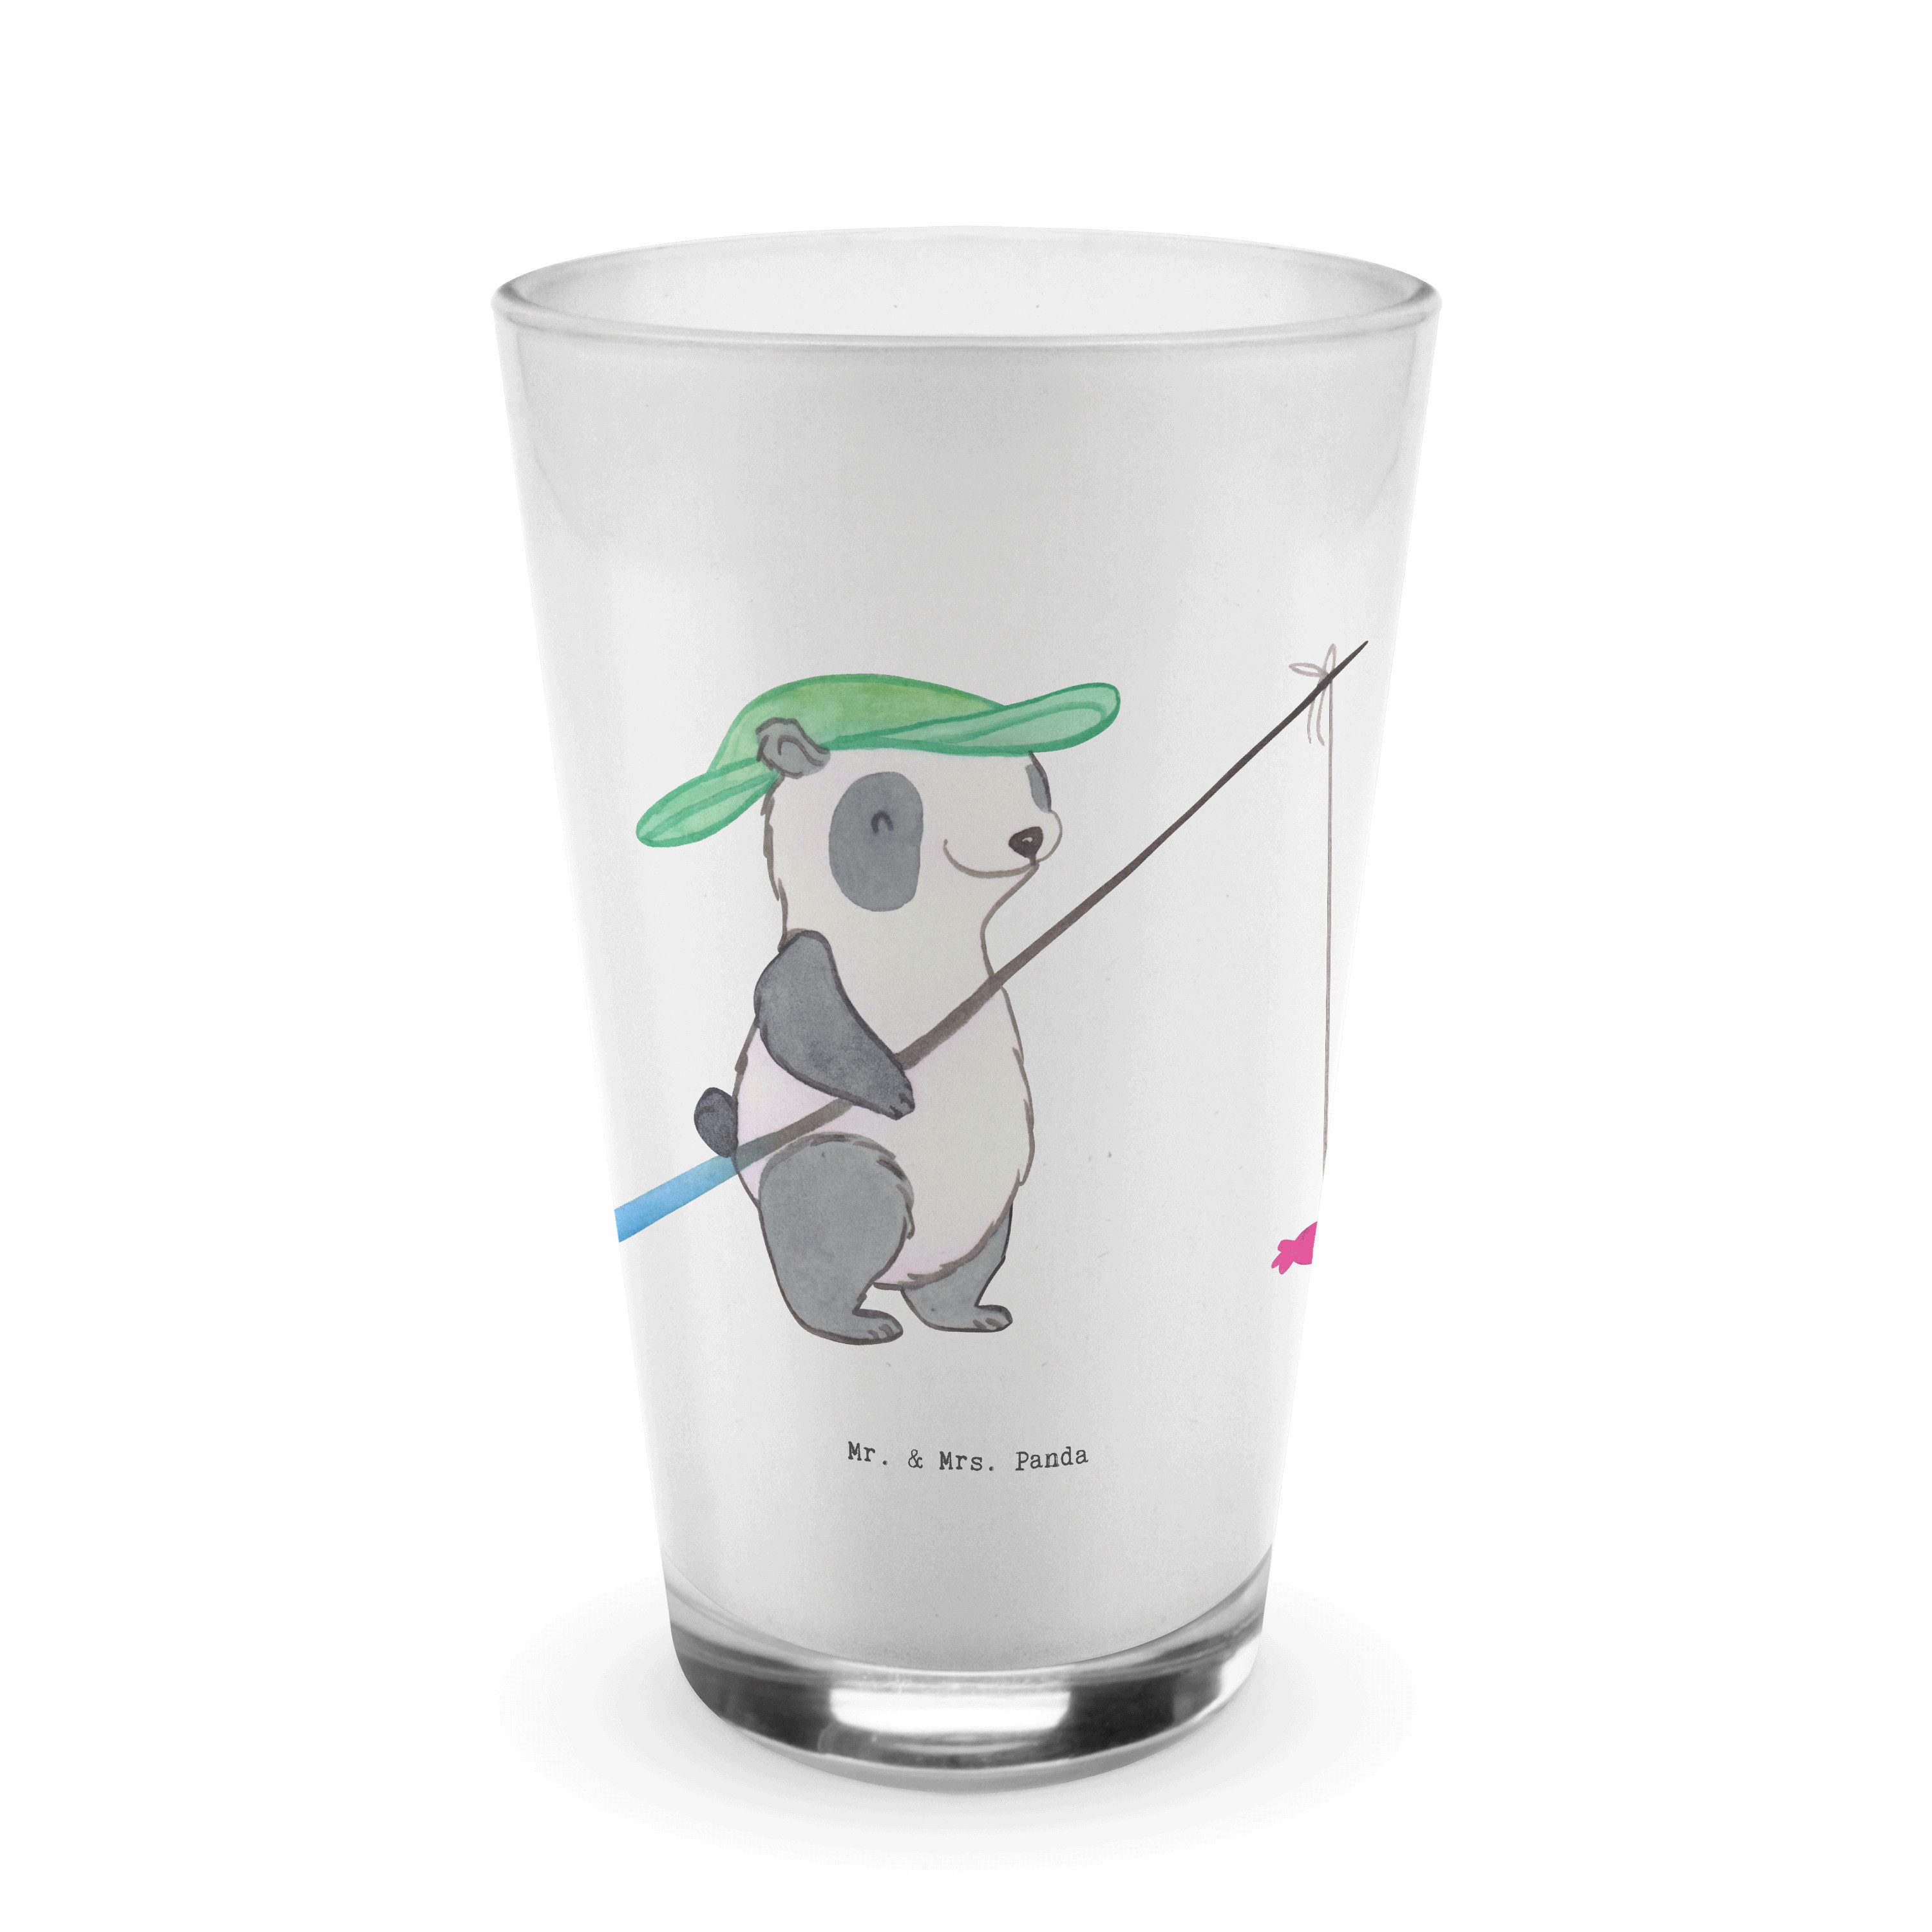 Mr. & Mrs. Panda Glas Panda Angeln - Transparent - Geschenk, Danke, Glas, Cappuccino Tasse, Premium Glas, Edles Matt-Design